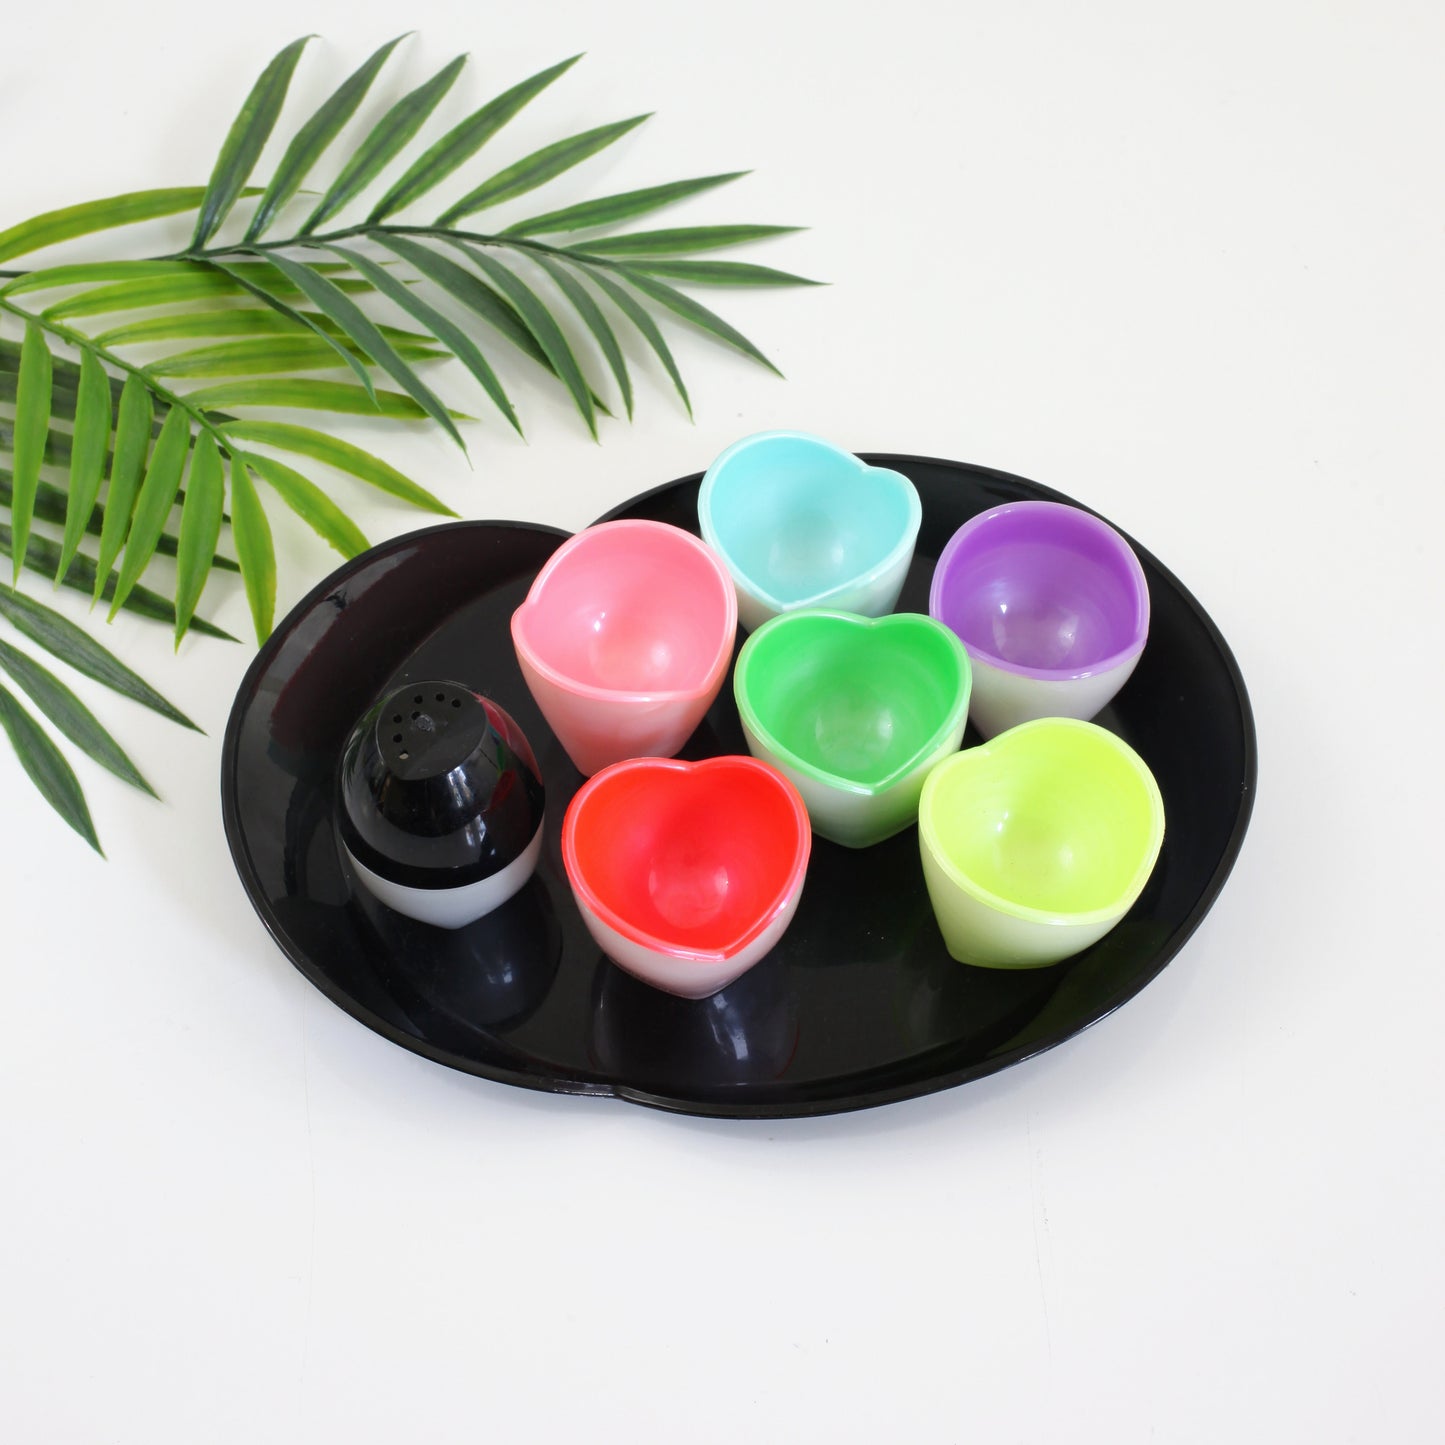 SOLD - Vintage Colorful Plastic Egg Cups Set / DBGM Germany